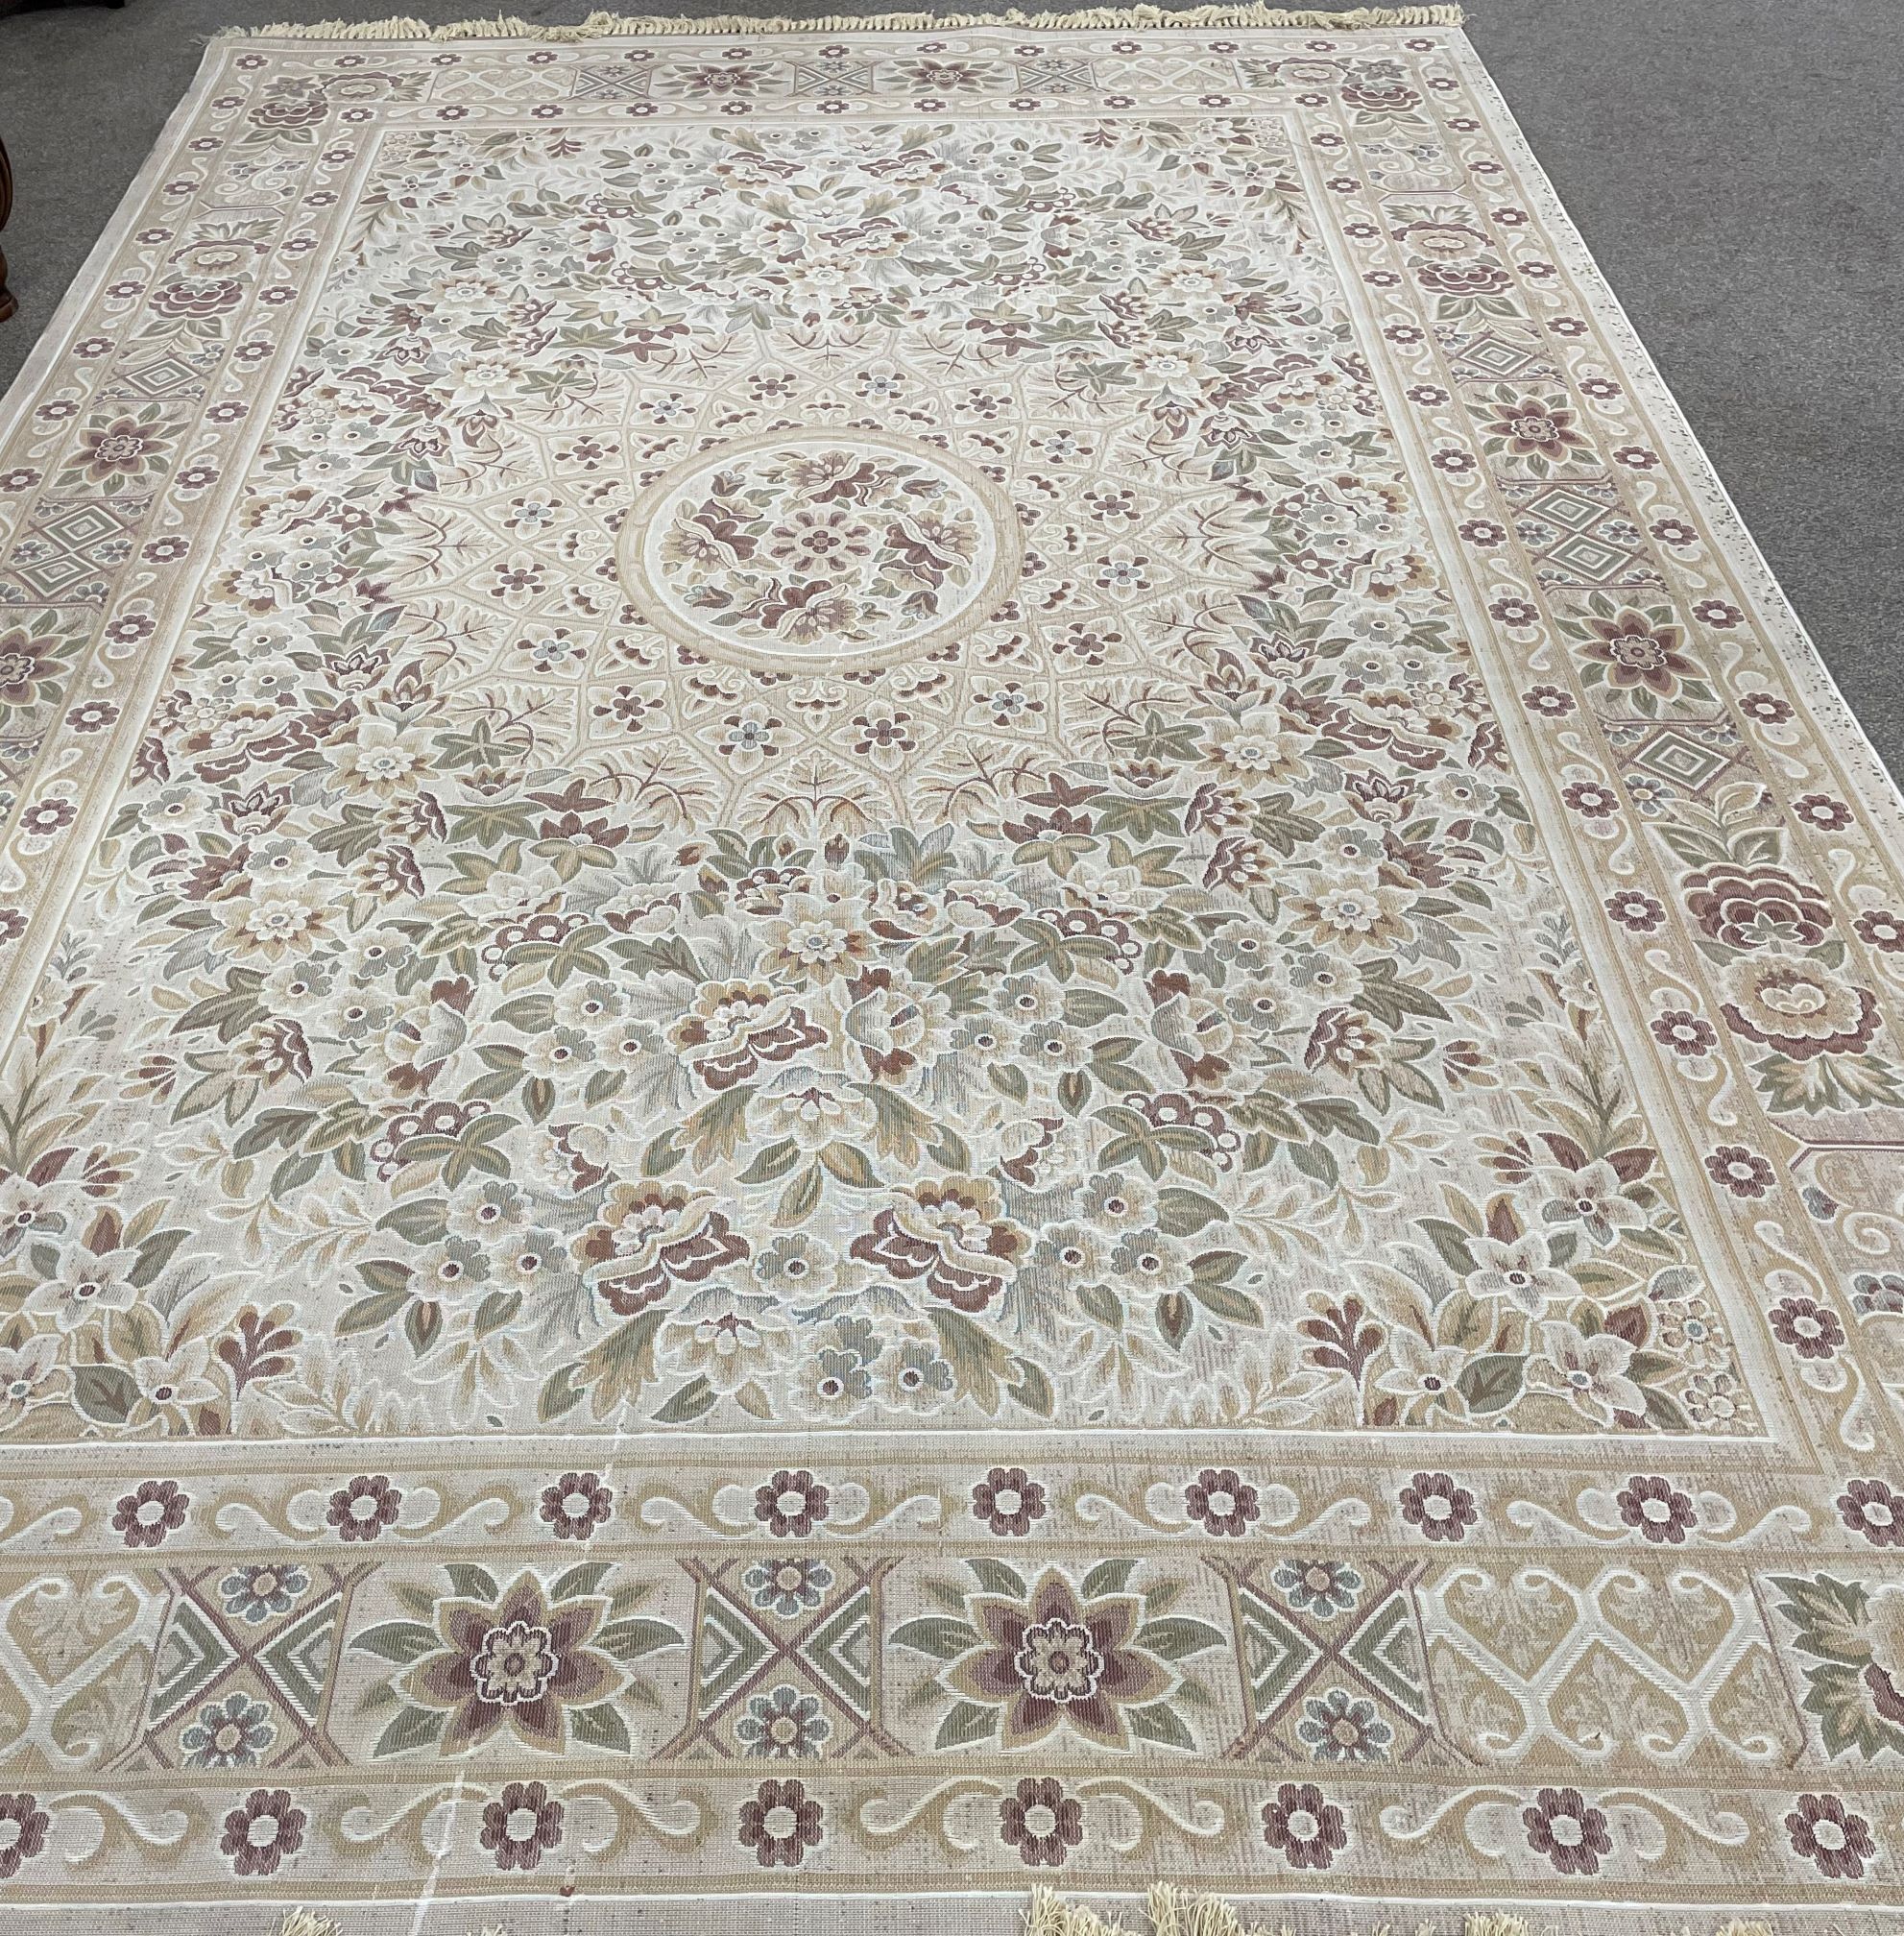 Gold & cream ground full pile Oriental carpet 350cm by 240cm - Image 8 of 8